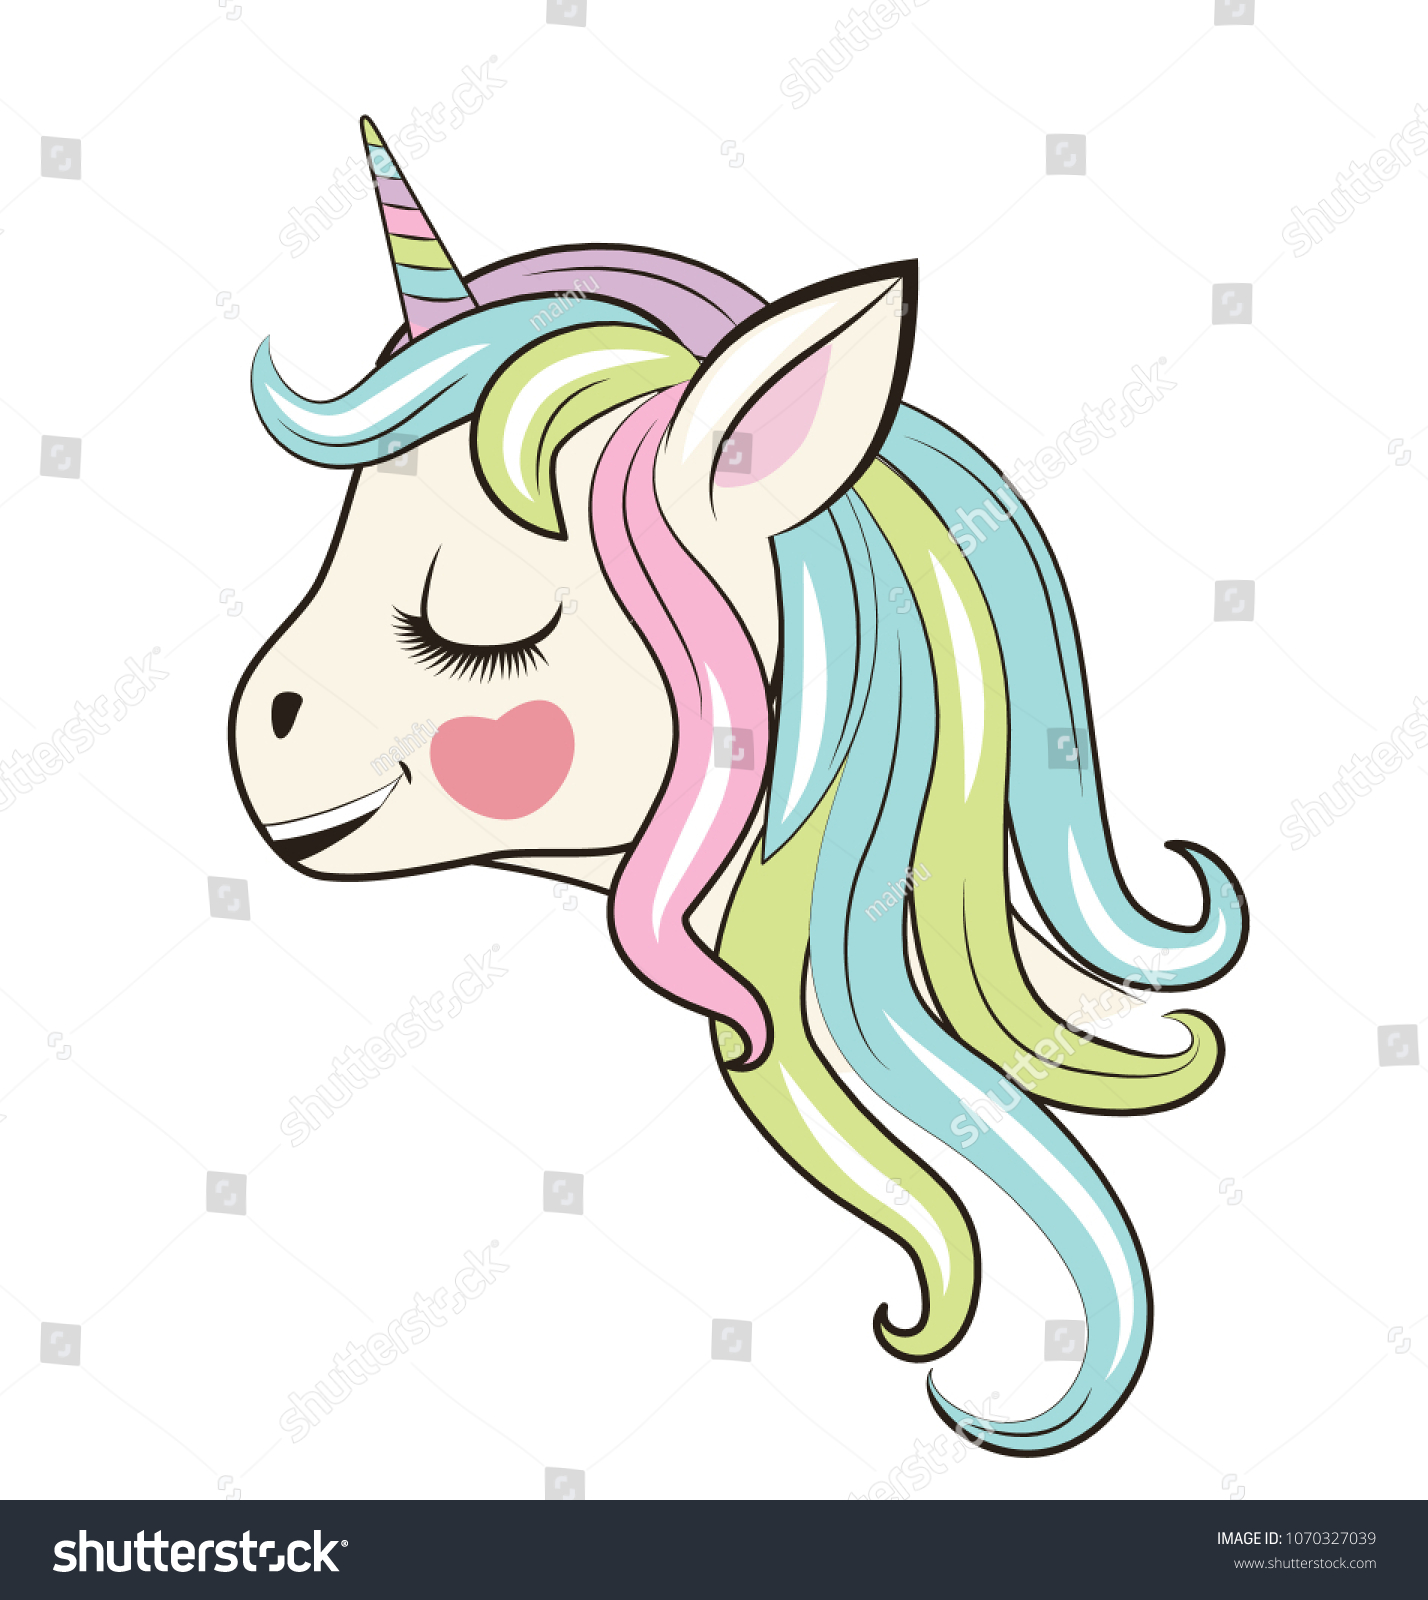 Cute Unicorn Smiles Closed Eyes Head Stock Vector (Royalty Free ...